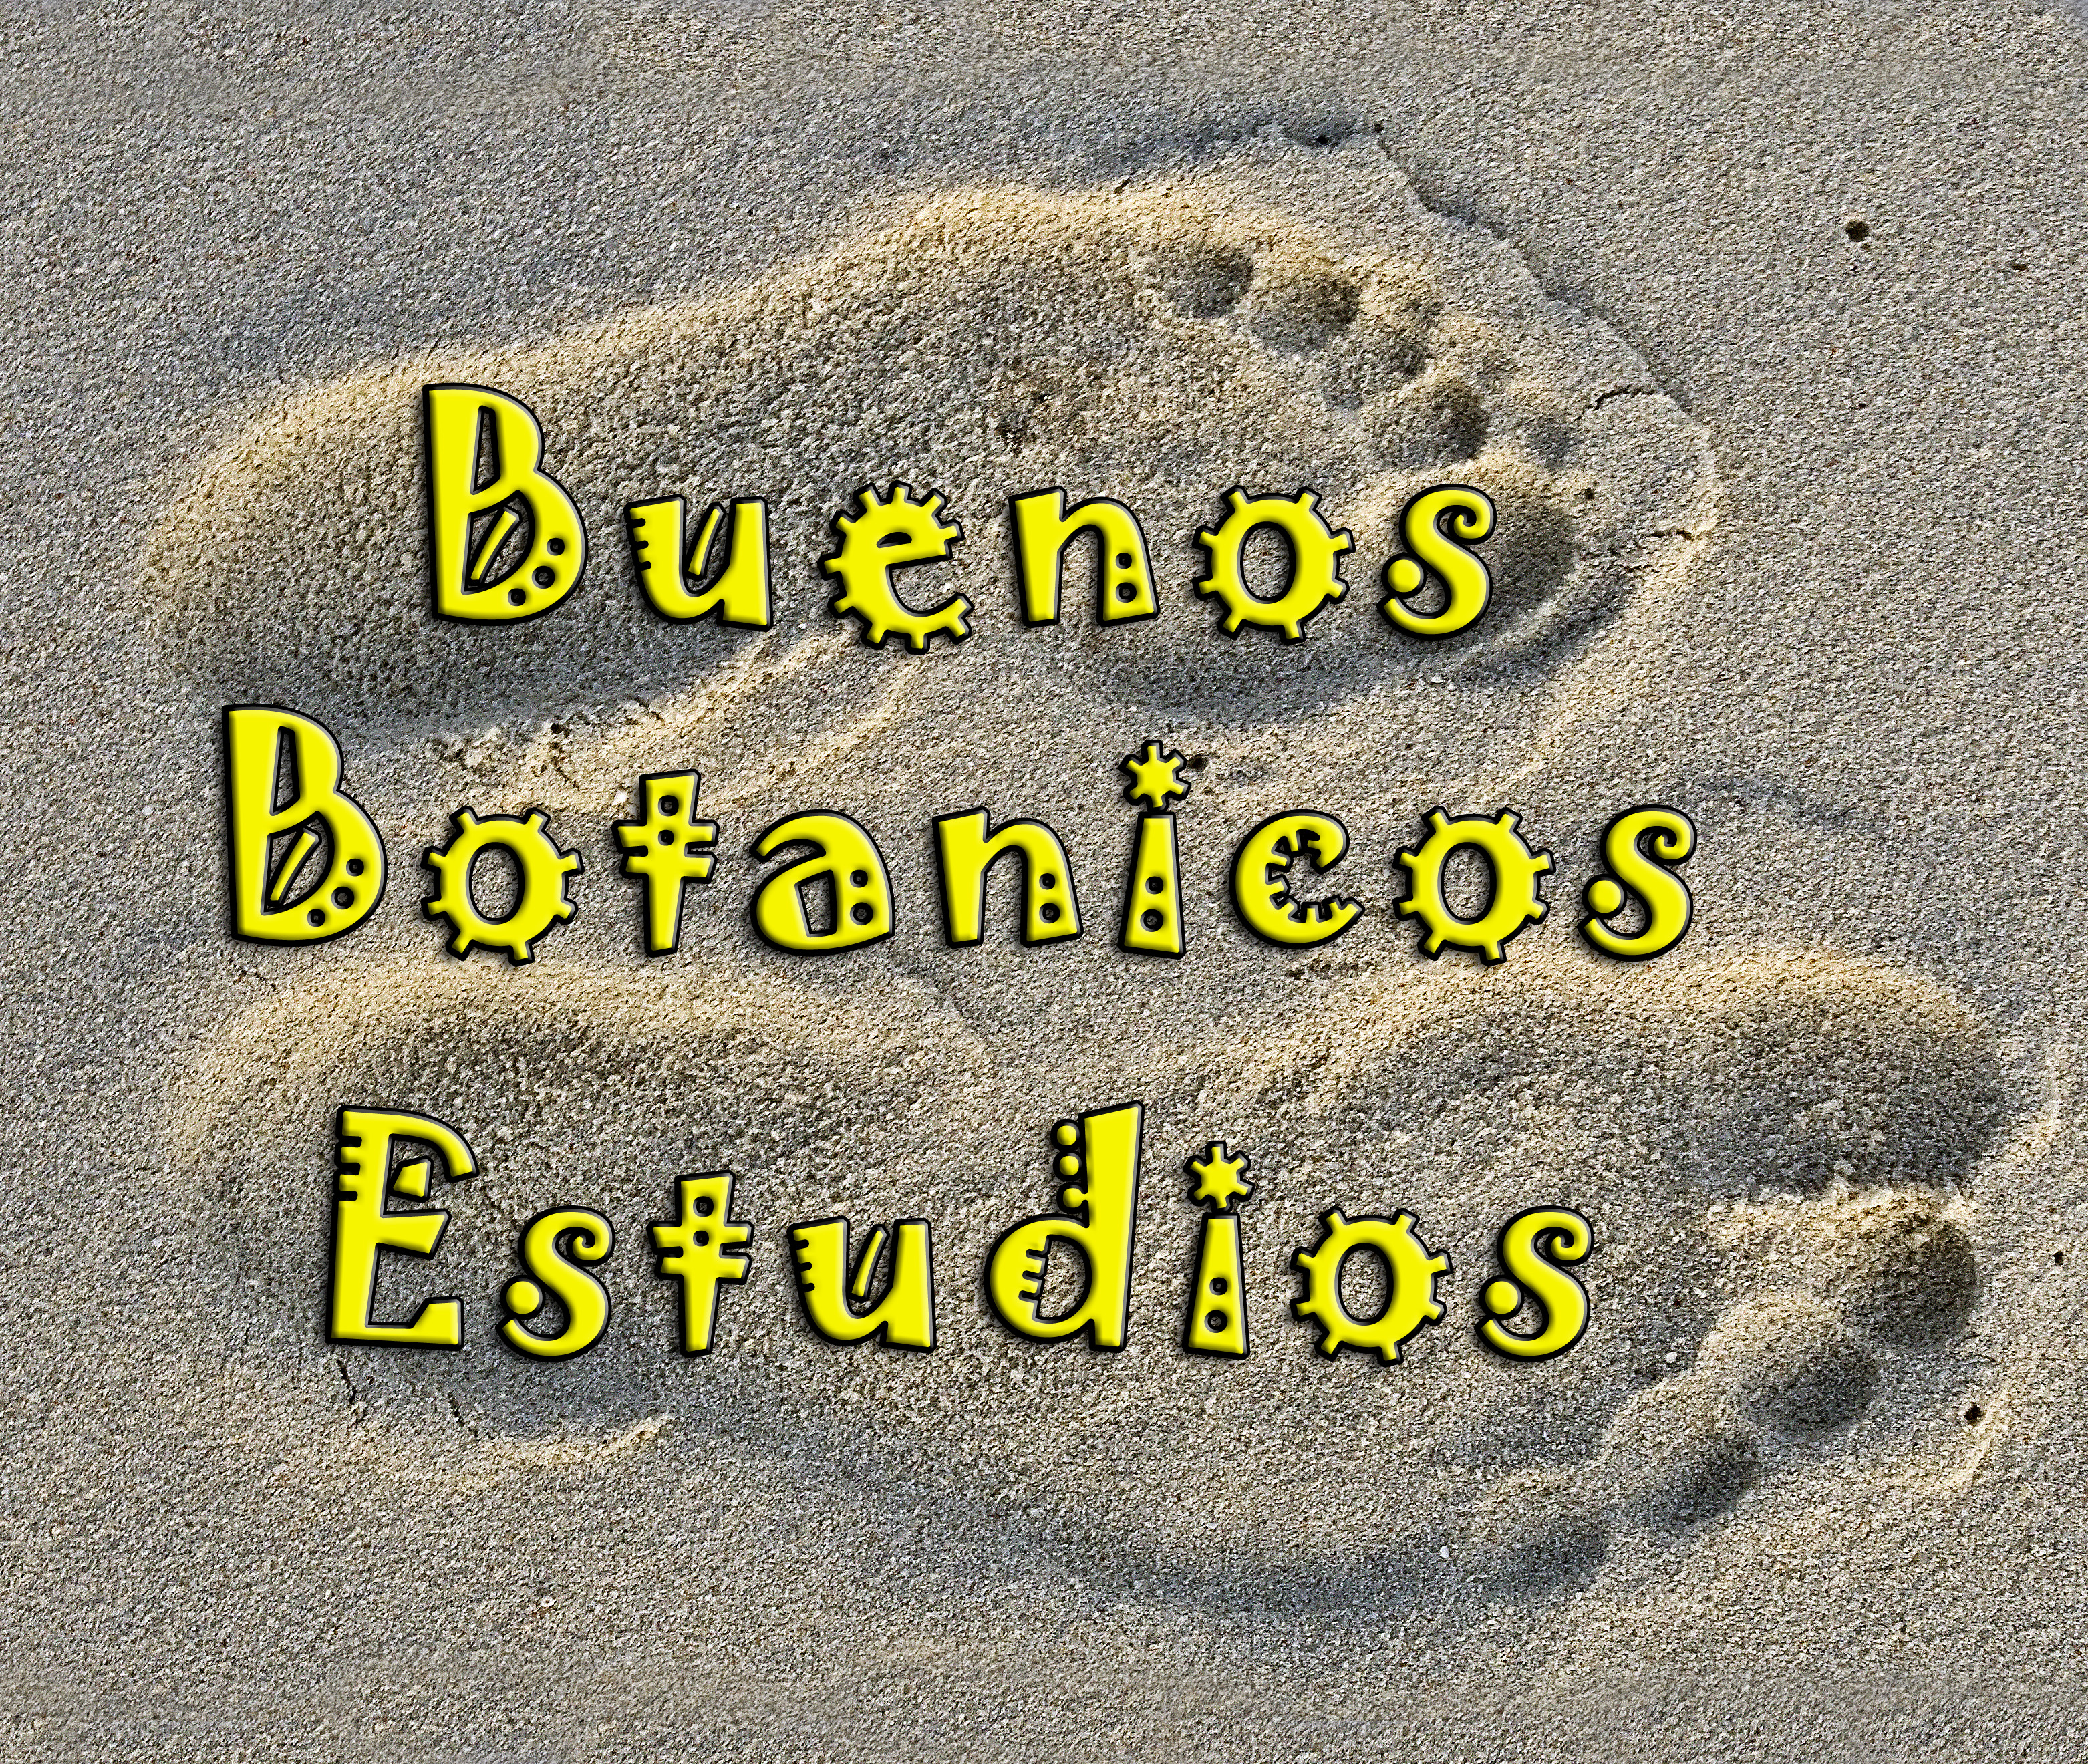 Buenos Botanicos Estudios